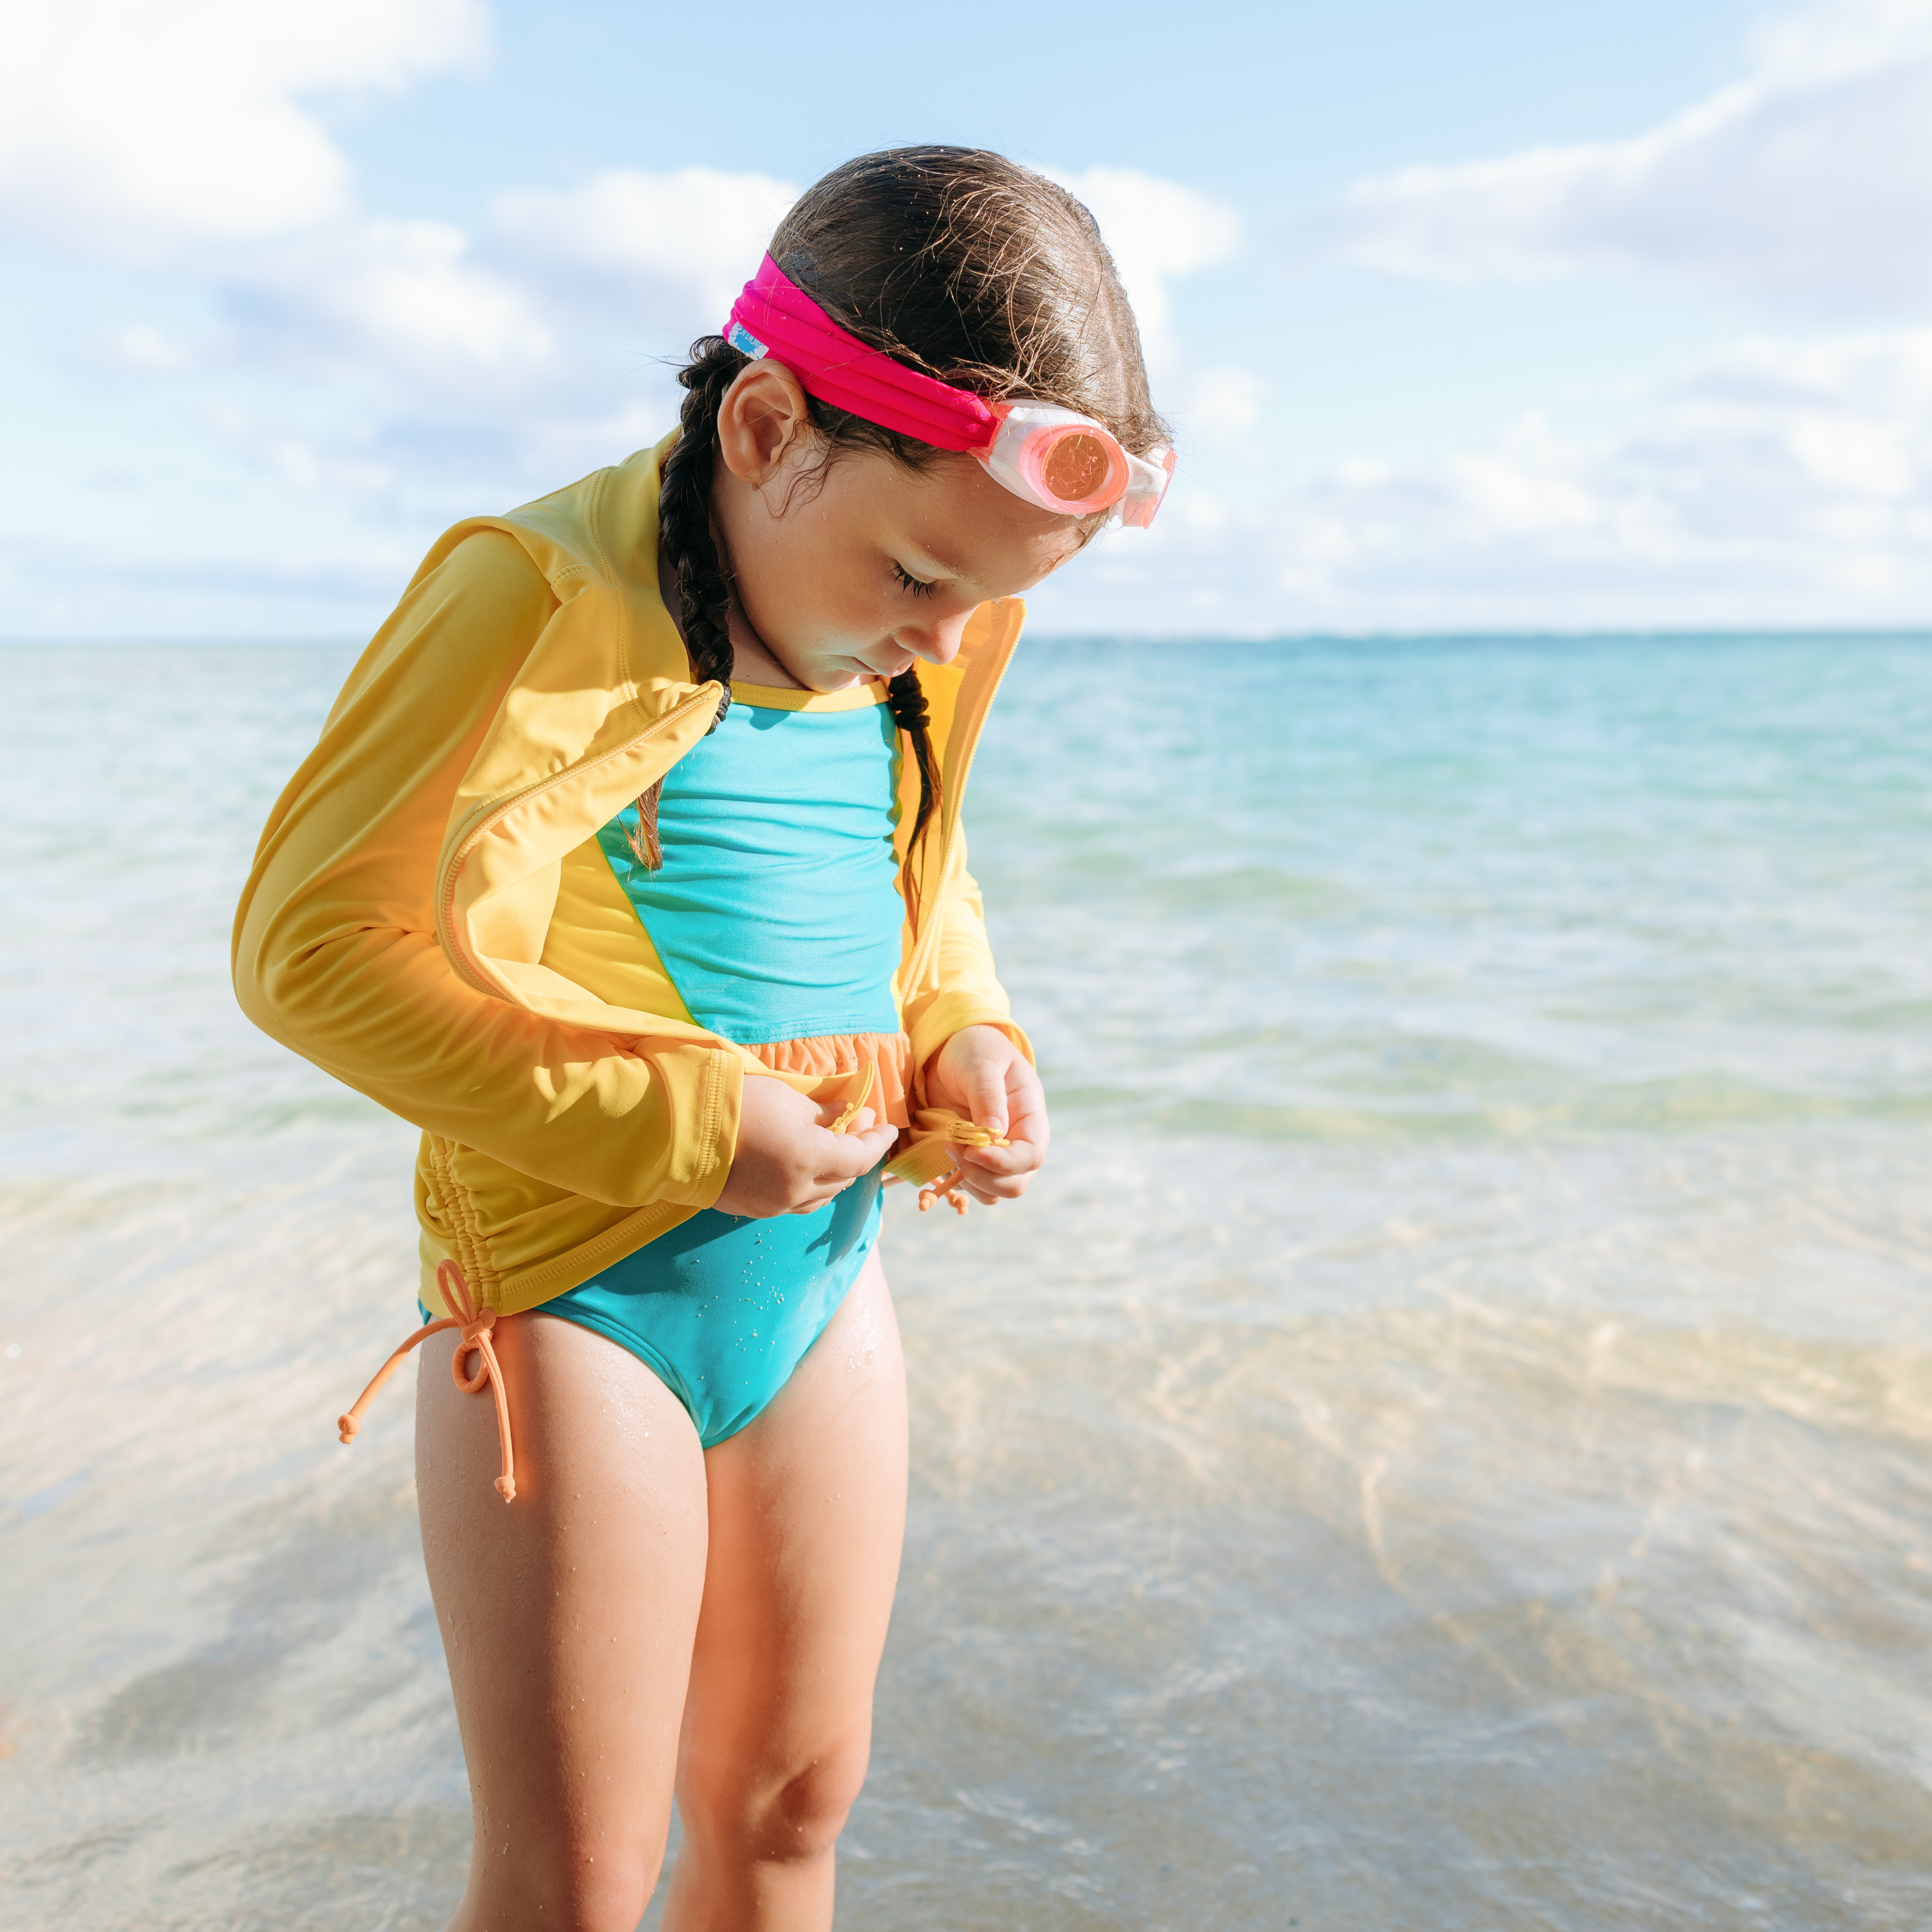 Long Sleeve 2 Piece Swimsuit Bathing Suit for Women